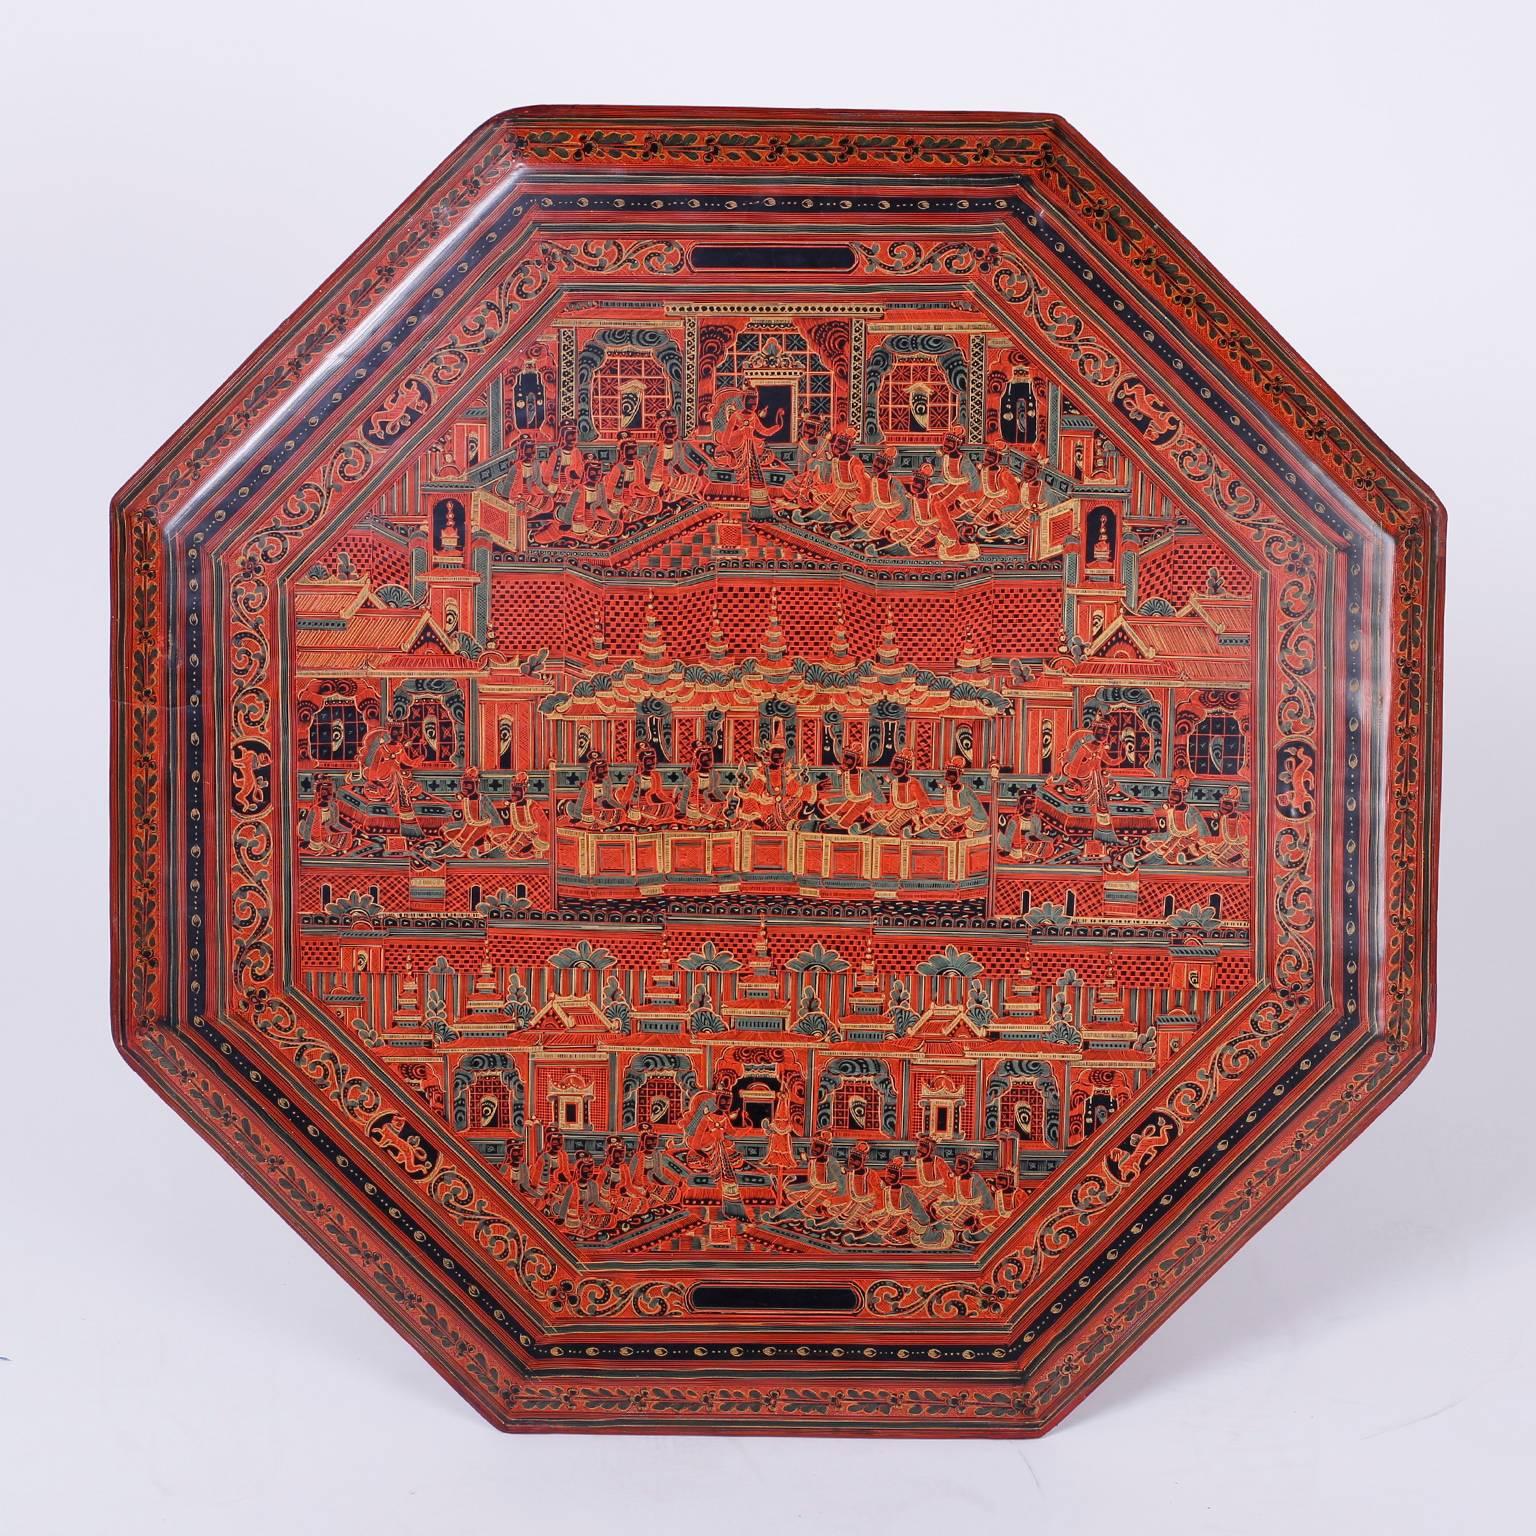 Moorish Exotic Thai Hand-Painted Table For Sale